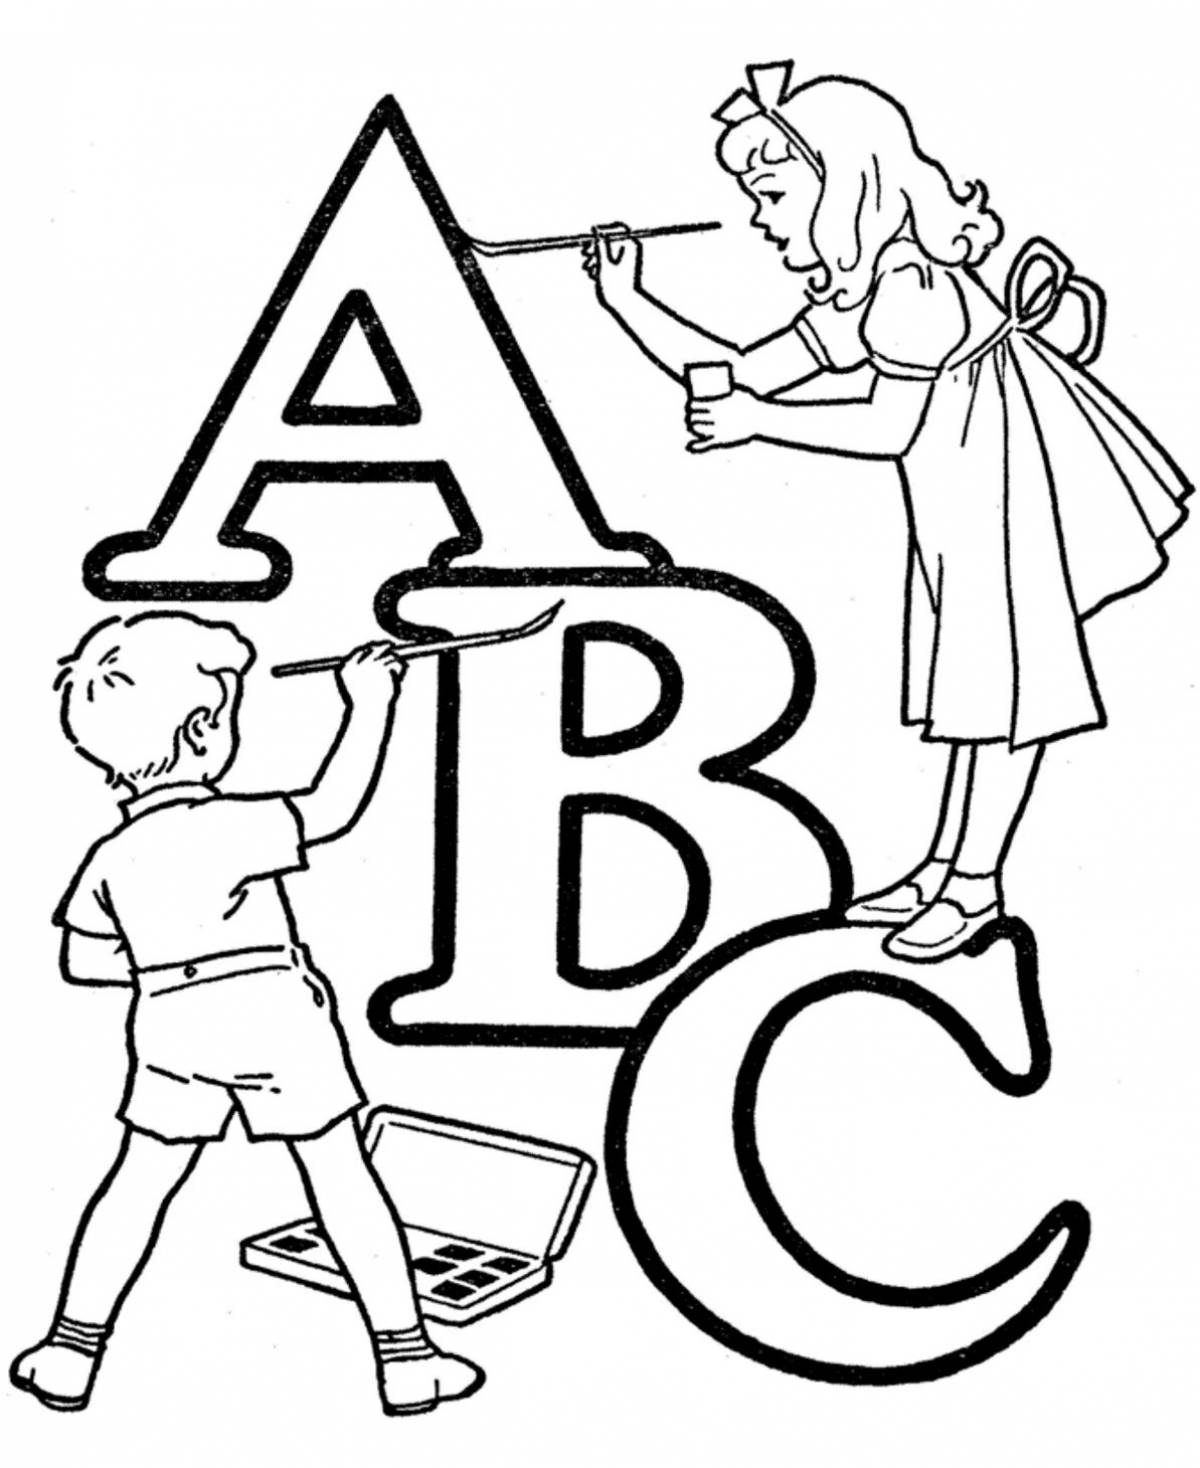 Abc for children #19